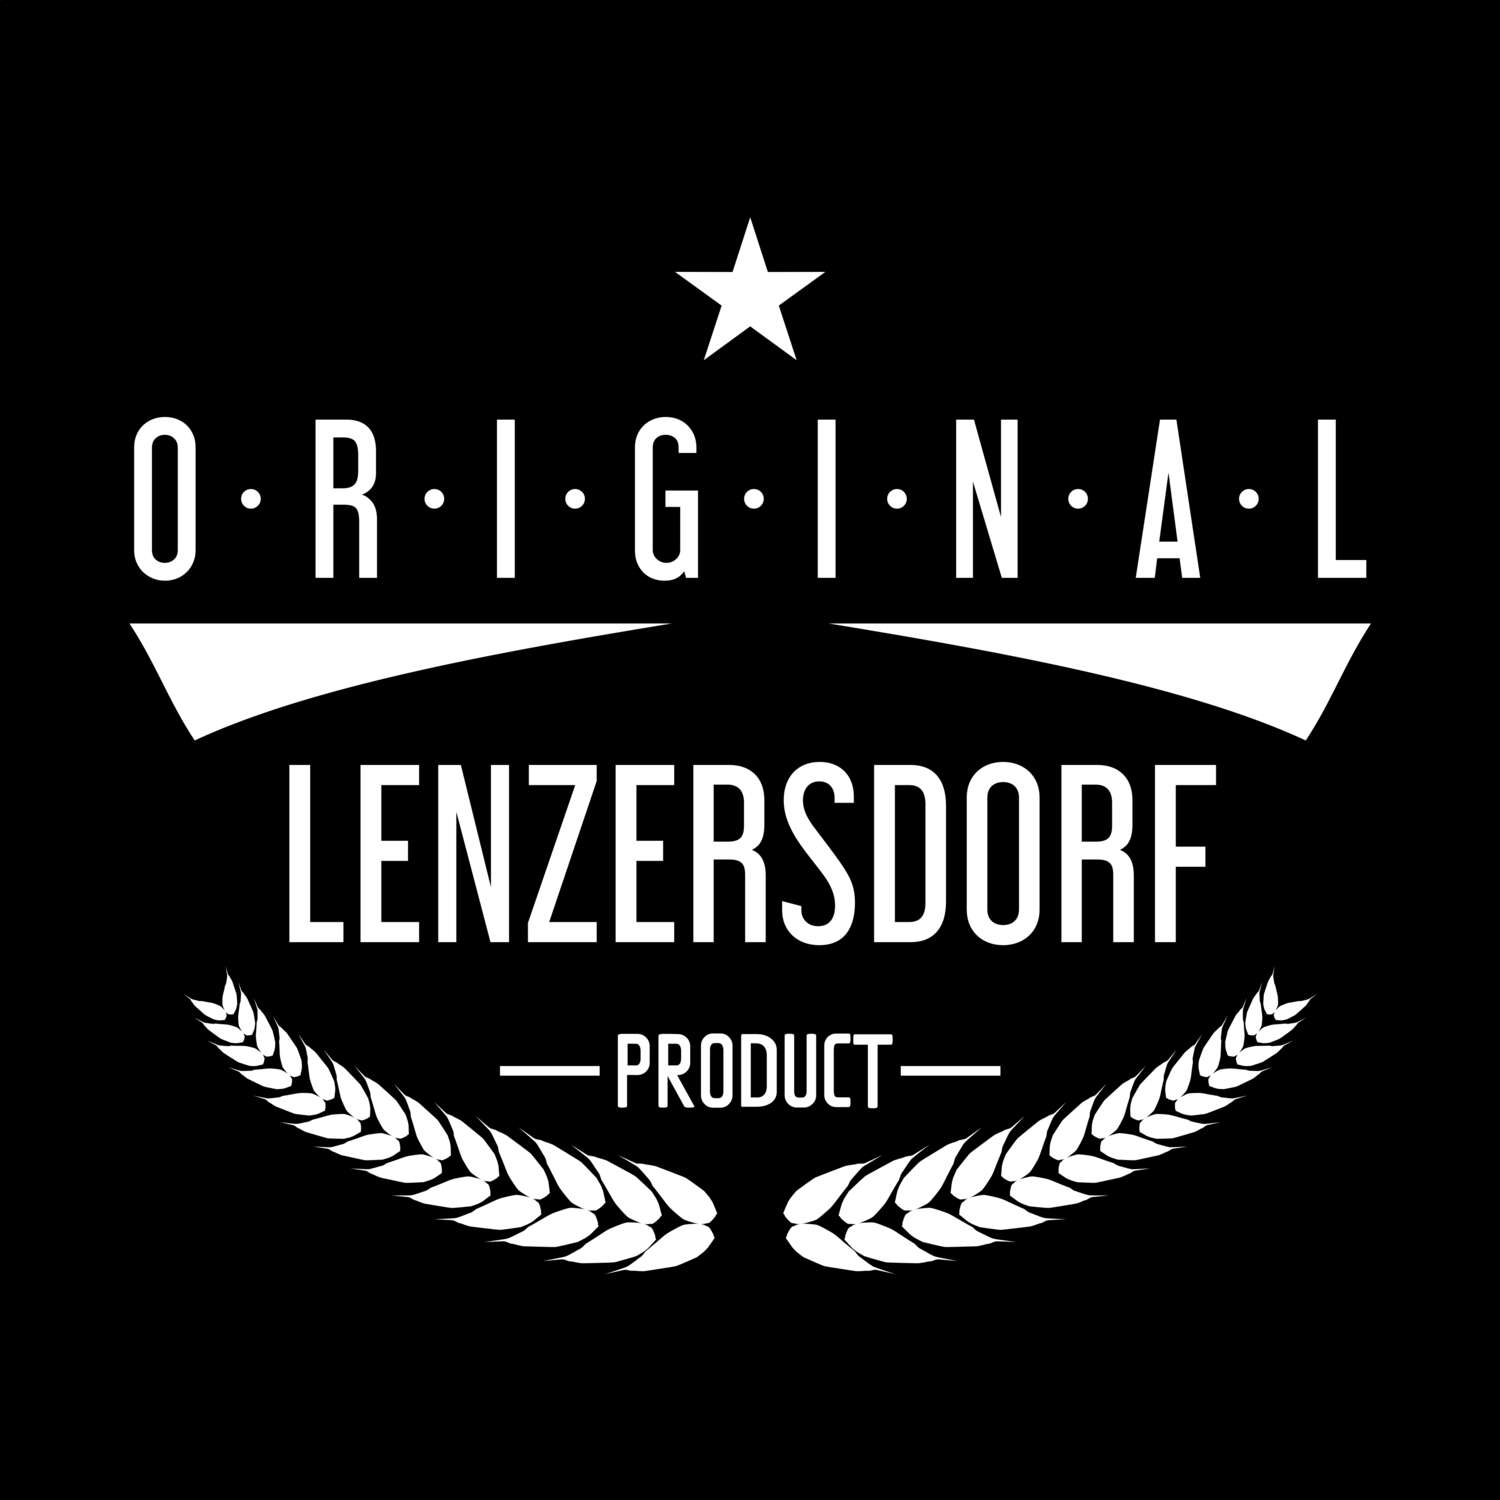 Lenzersdorf T-Shirt »Original Product«